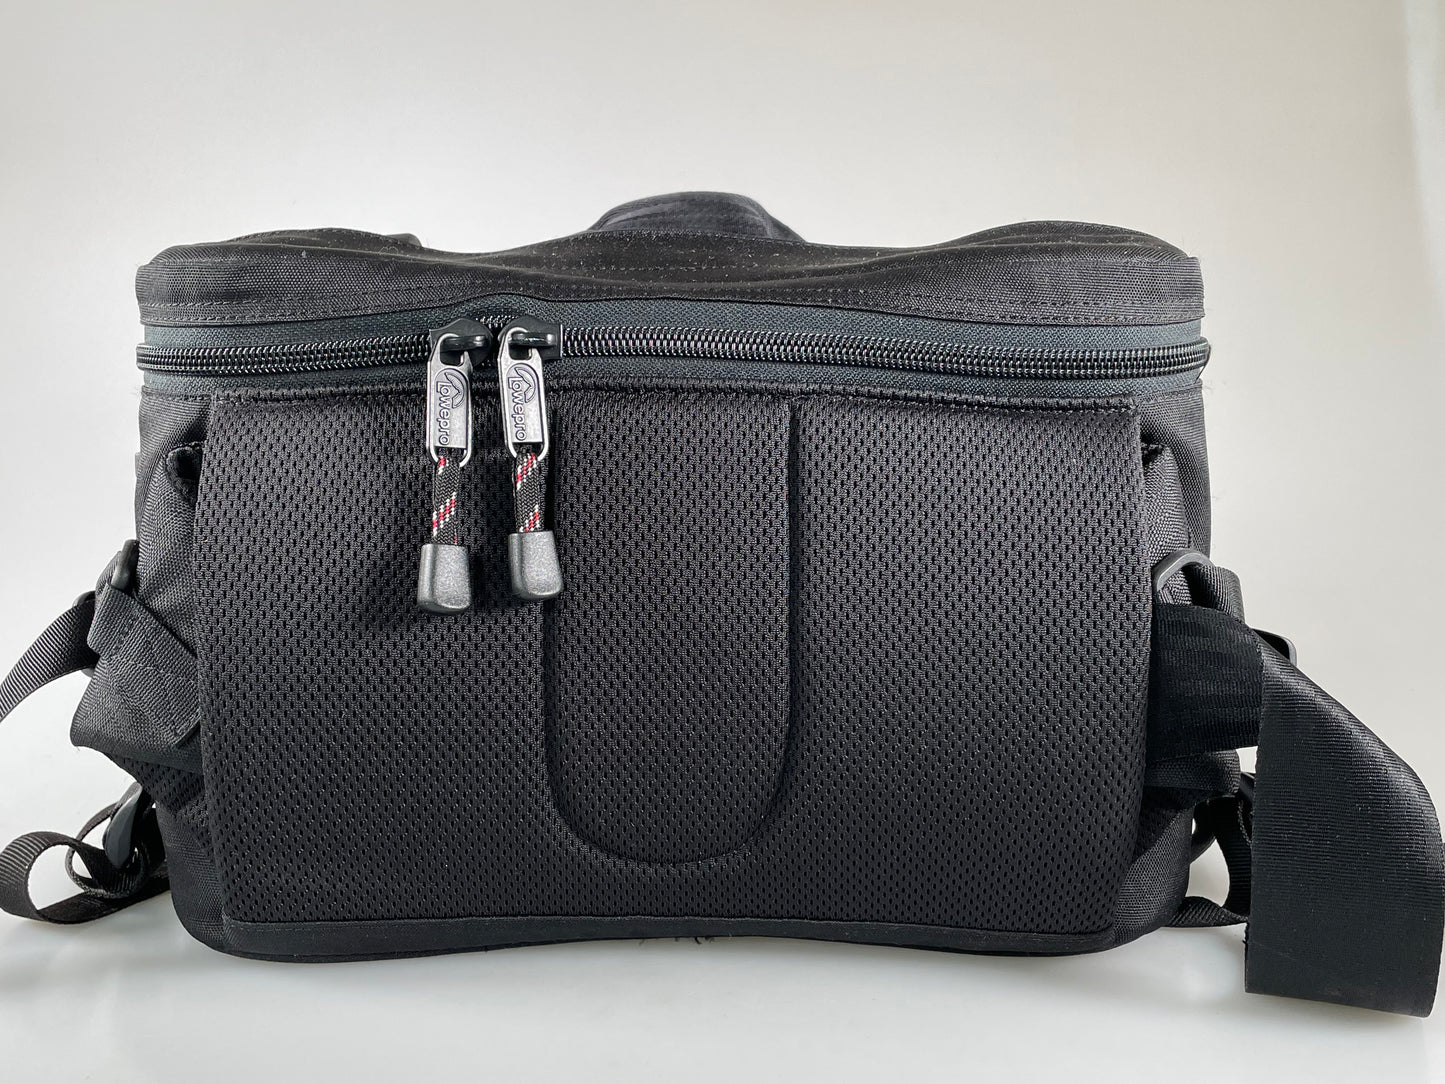 Lowepro Black canvas Camera Bag case